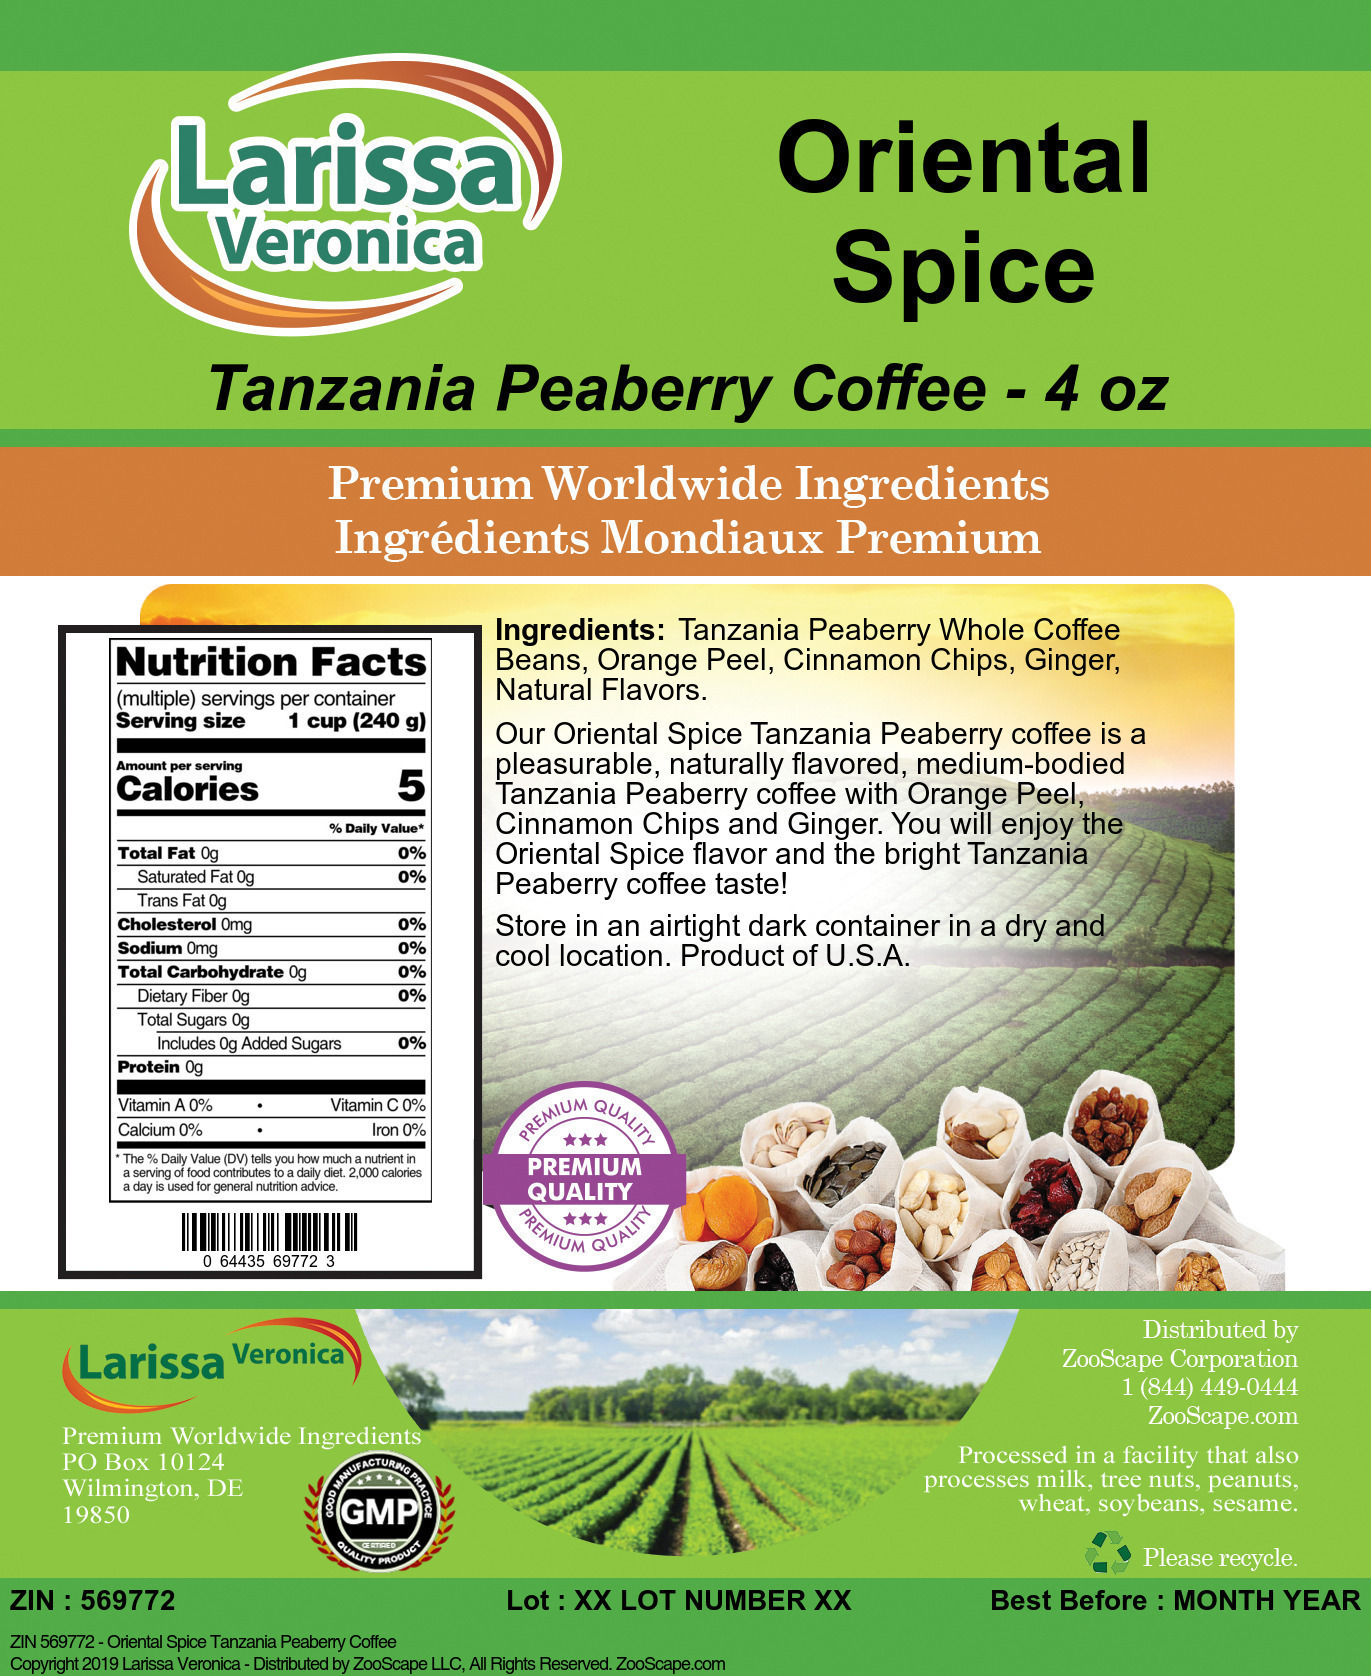 Oriental Spice Tanzania Peaberry Coffee - Label